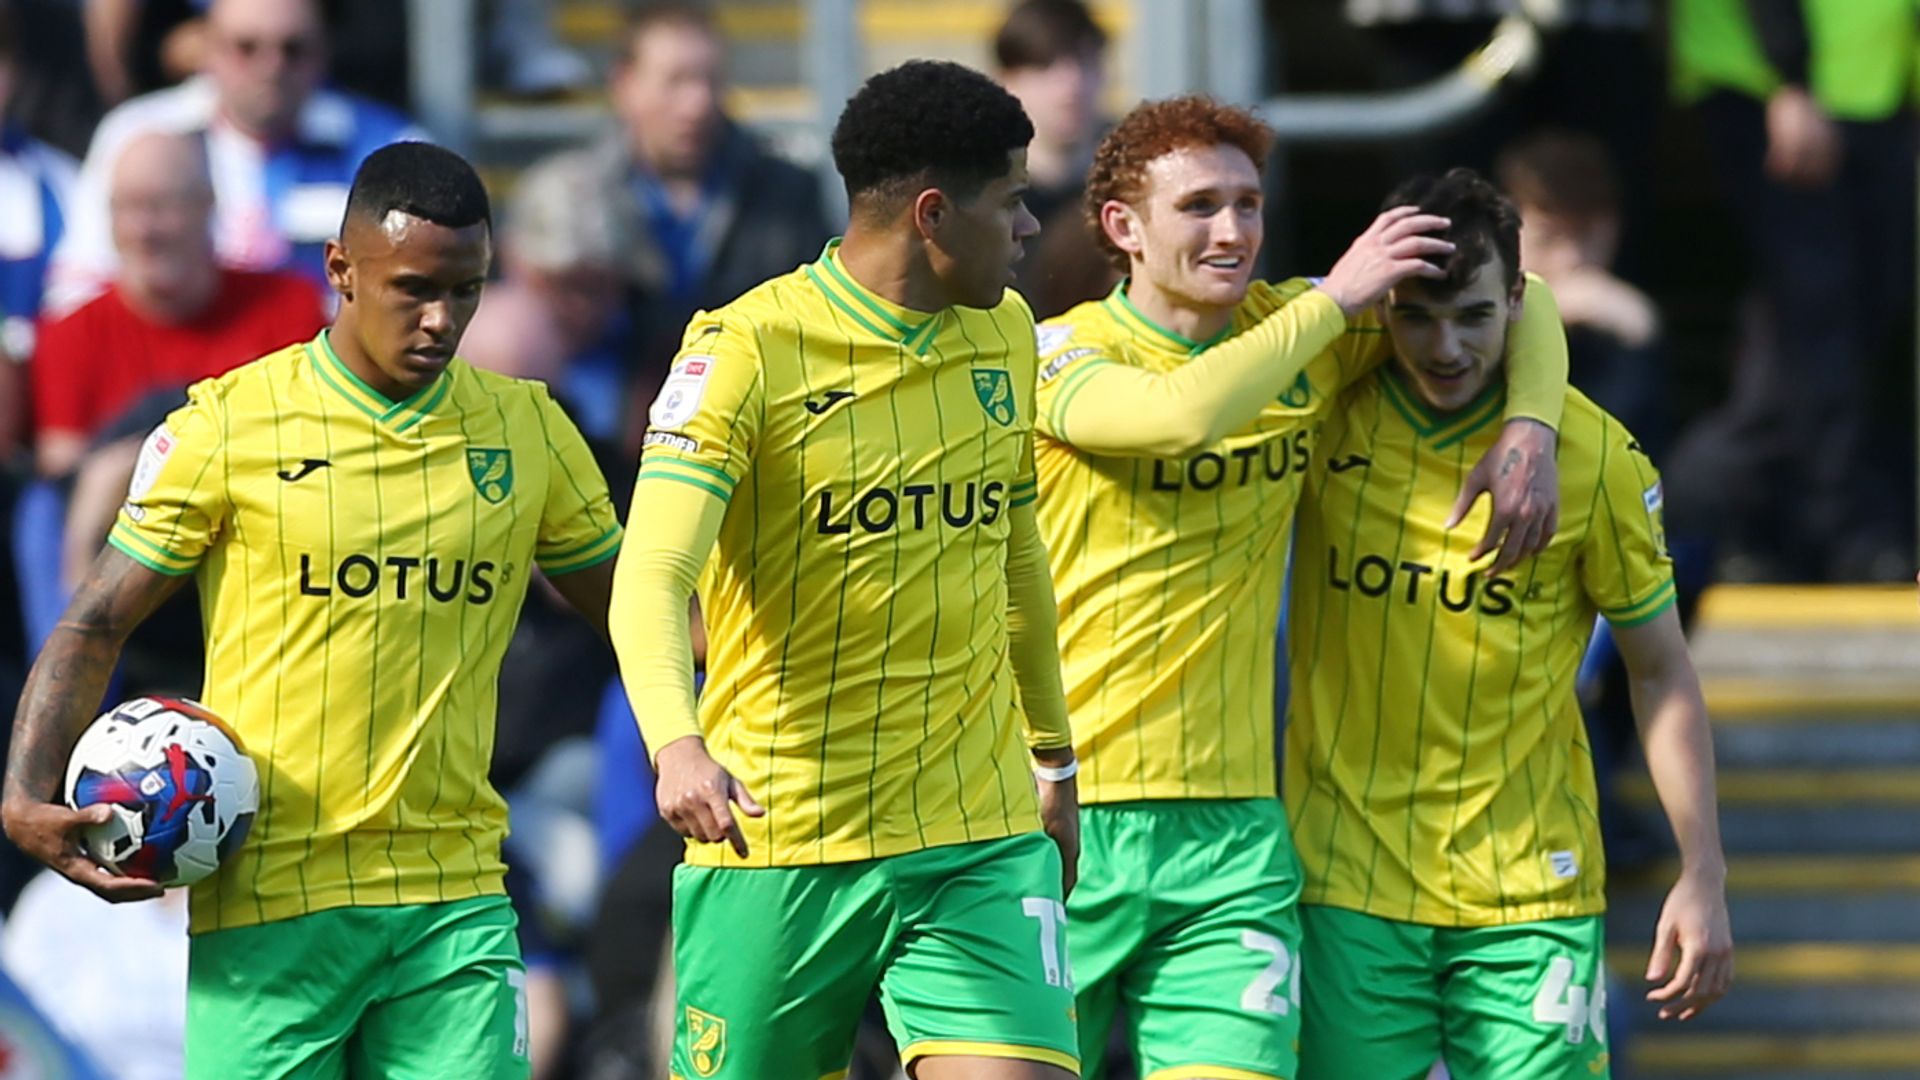 Norwich win at Blackburn in vital play-off clash